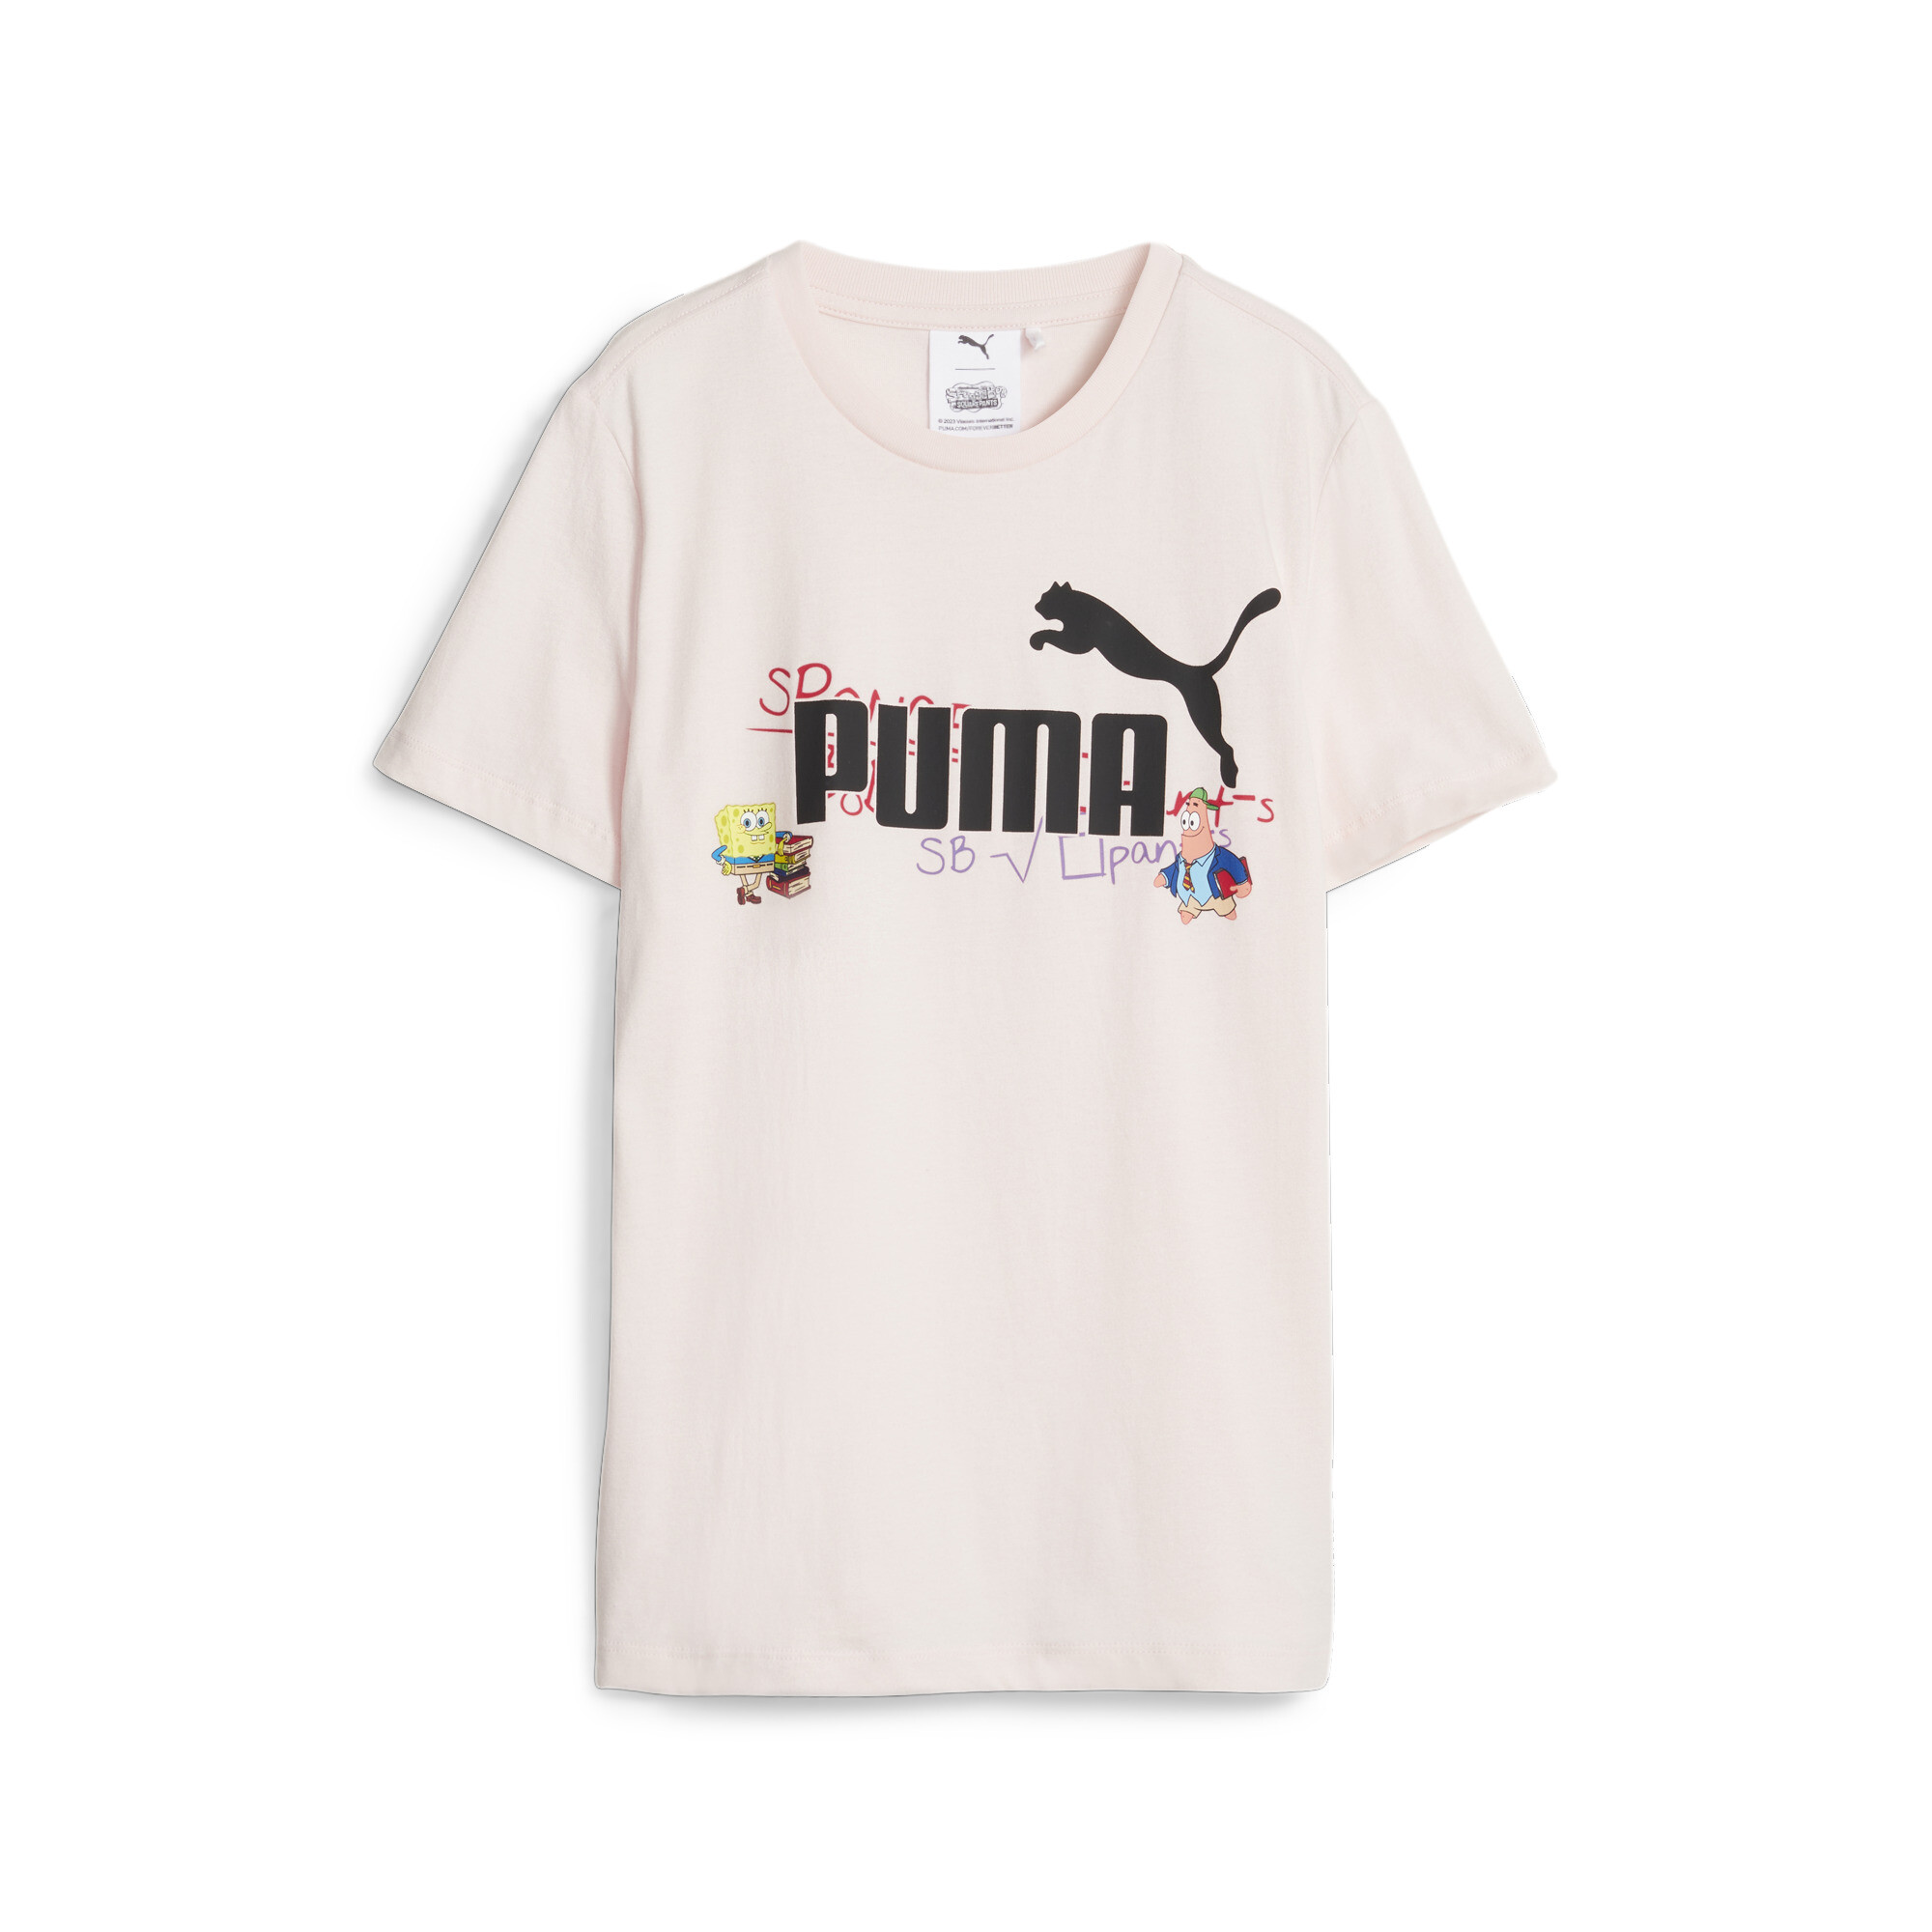 PUMA X SPONGEBOB SQUAREPANTS T-Shirt In Pink, Size 13-14 Youth